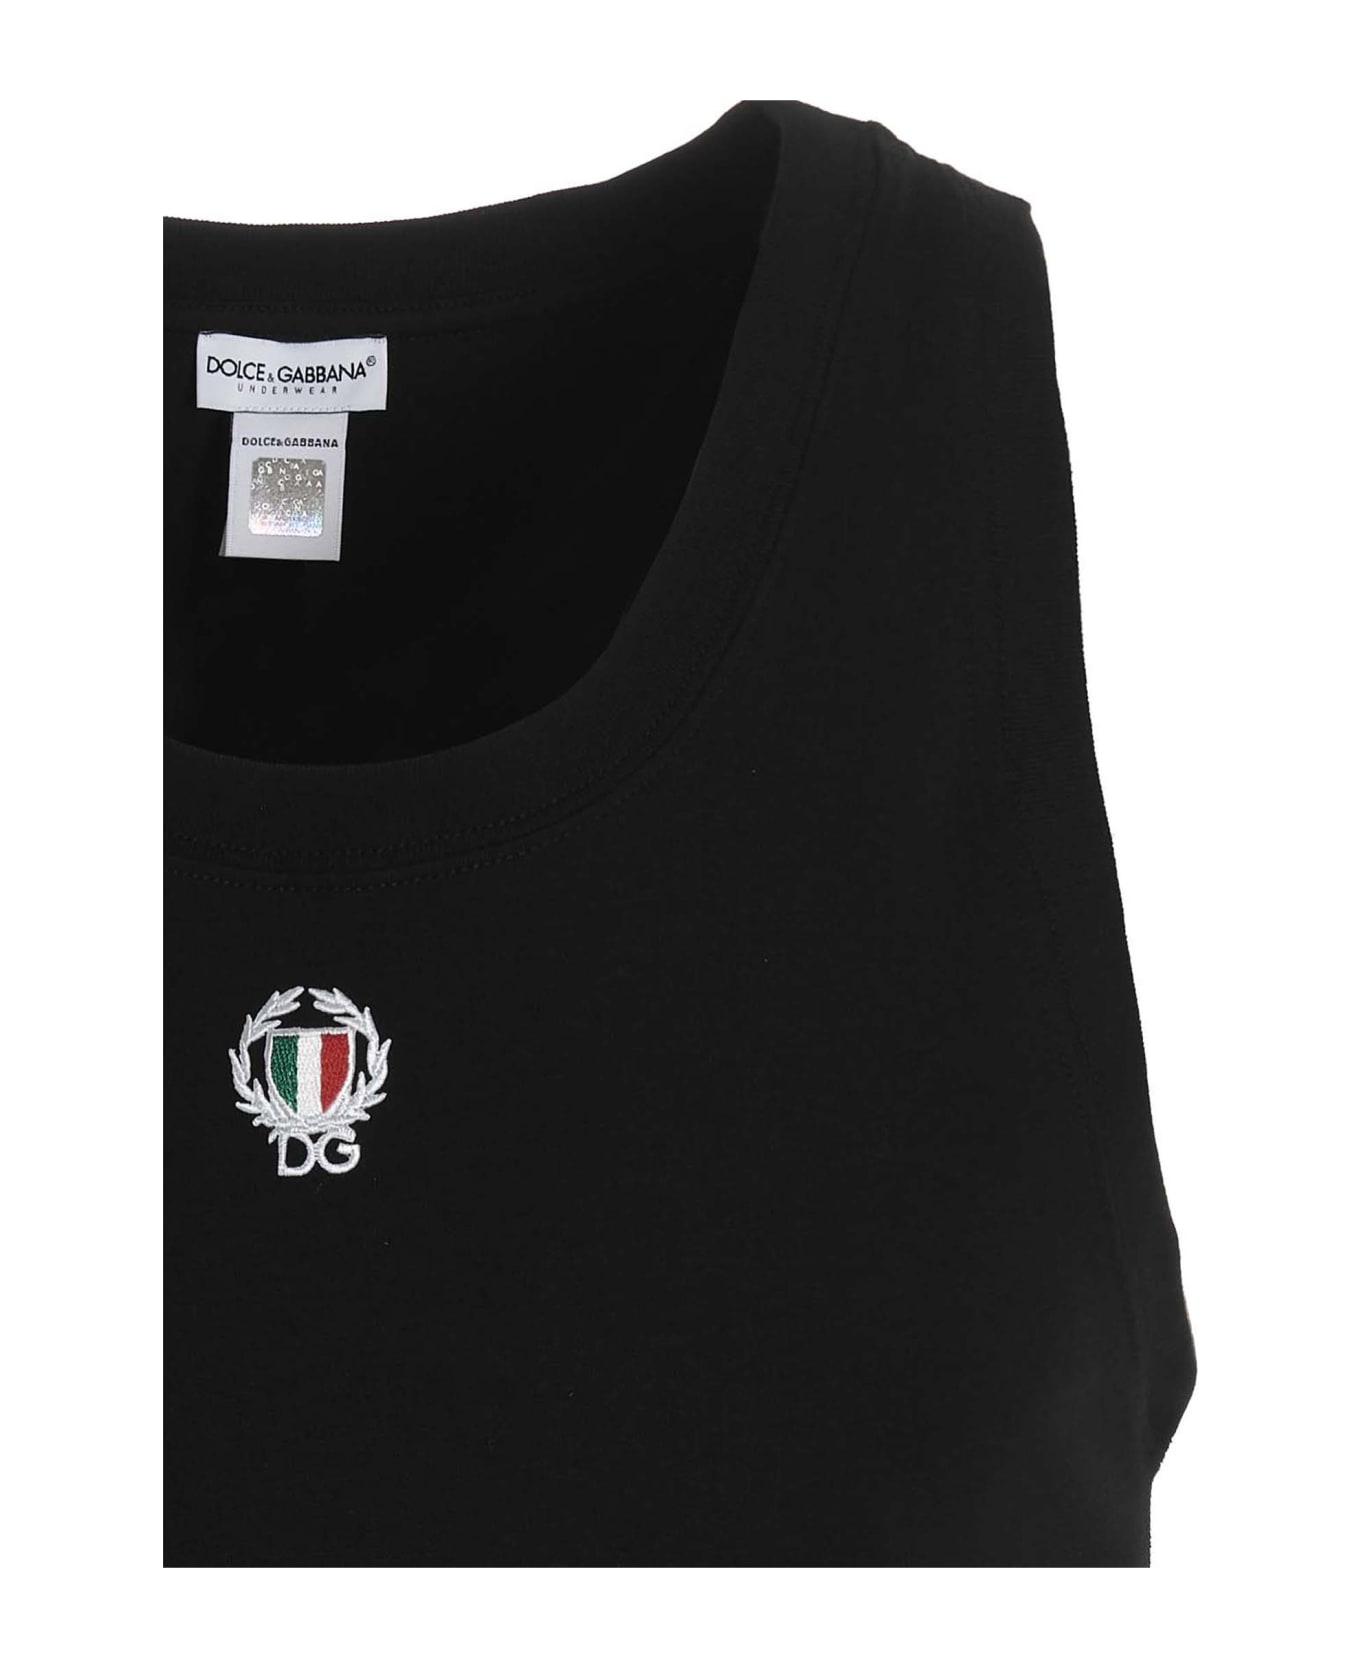 Dolce & Gabbana 'sport Crest' Tank Top - Black  